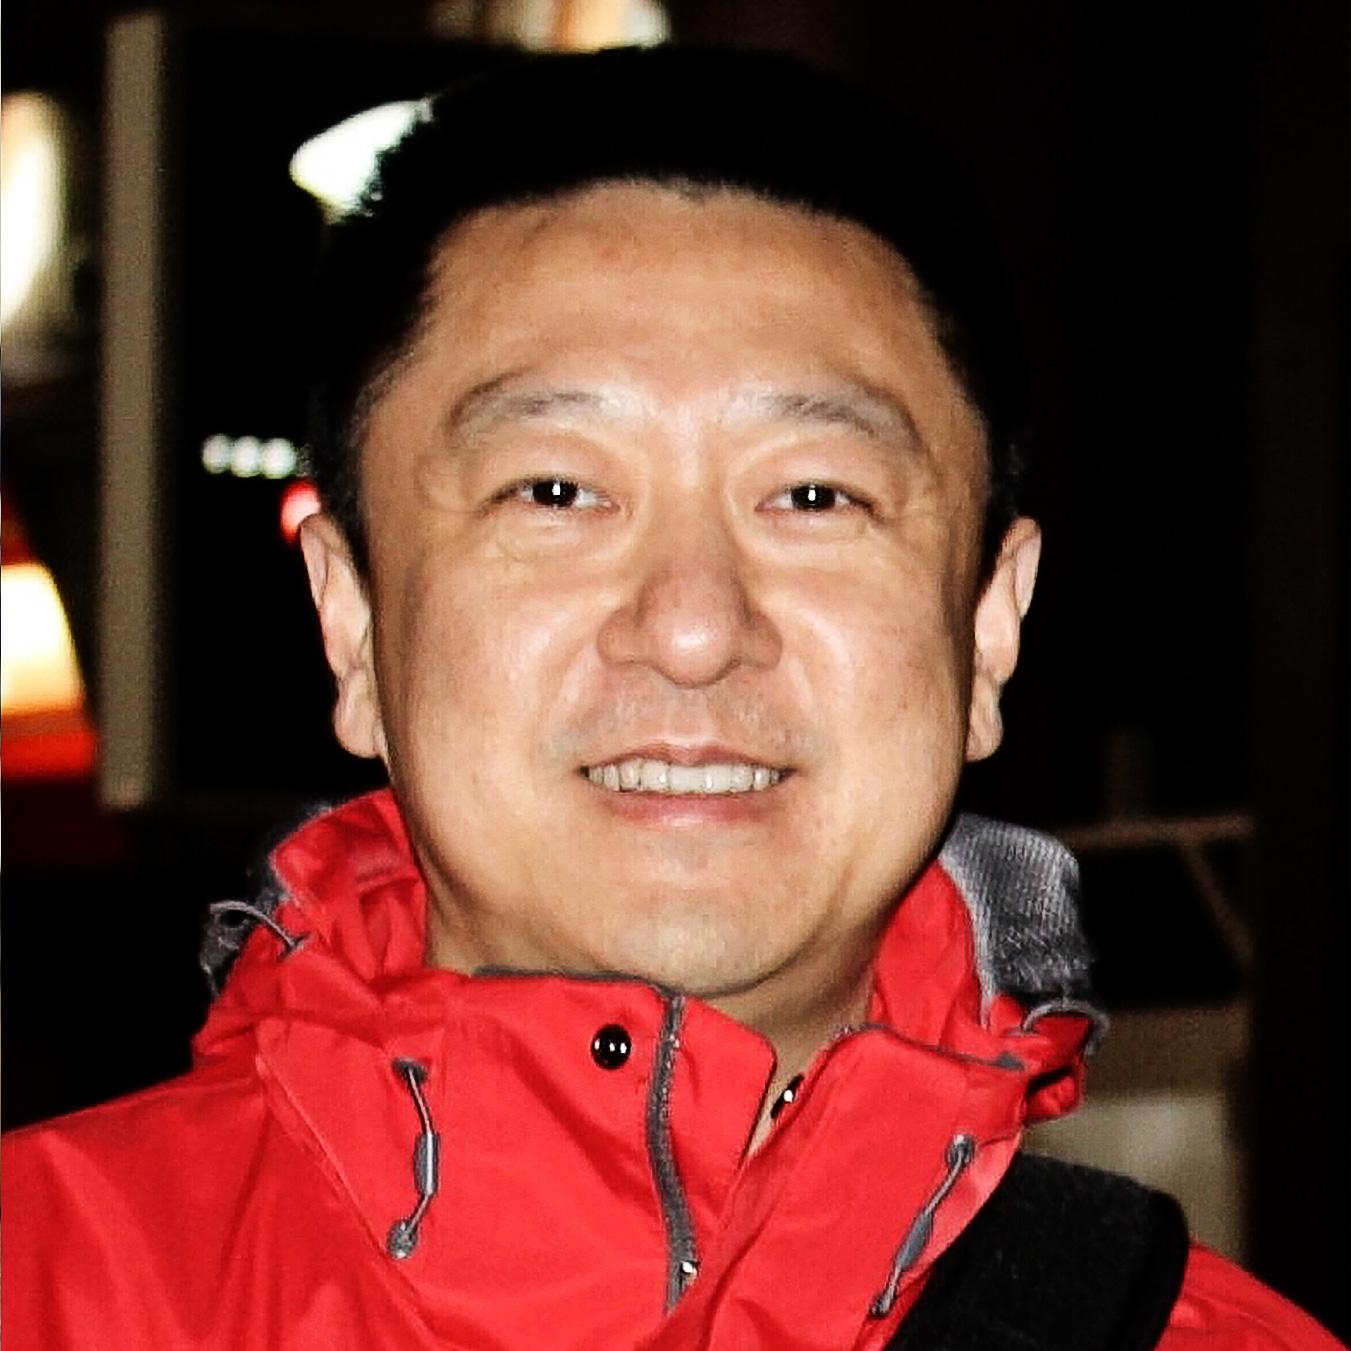 Jason Wang